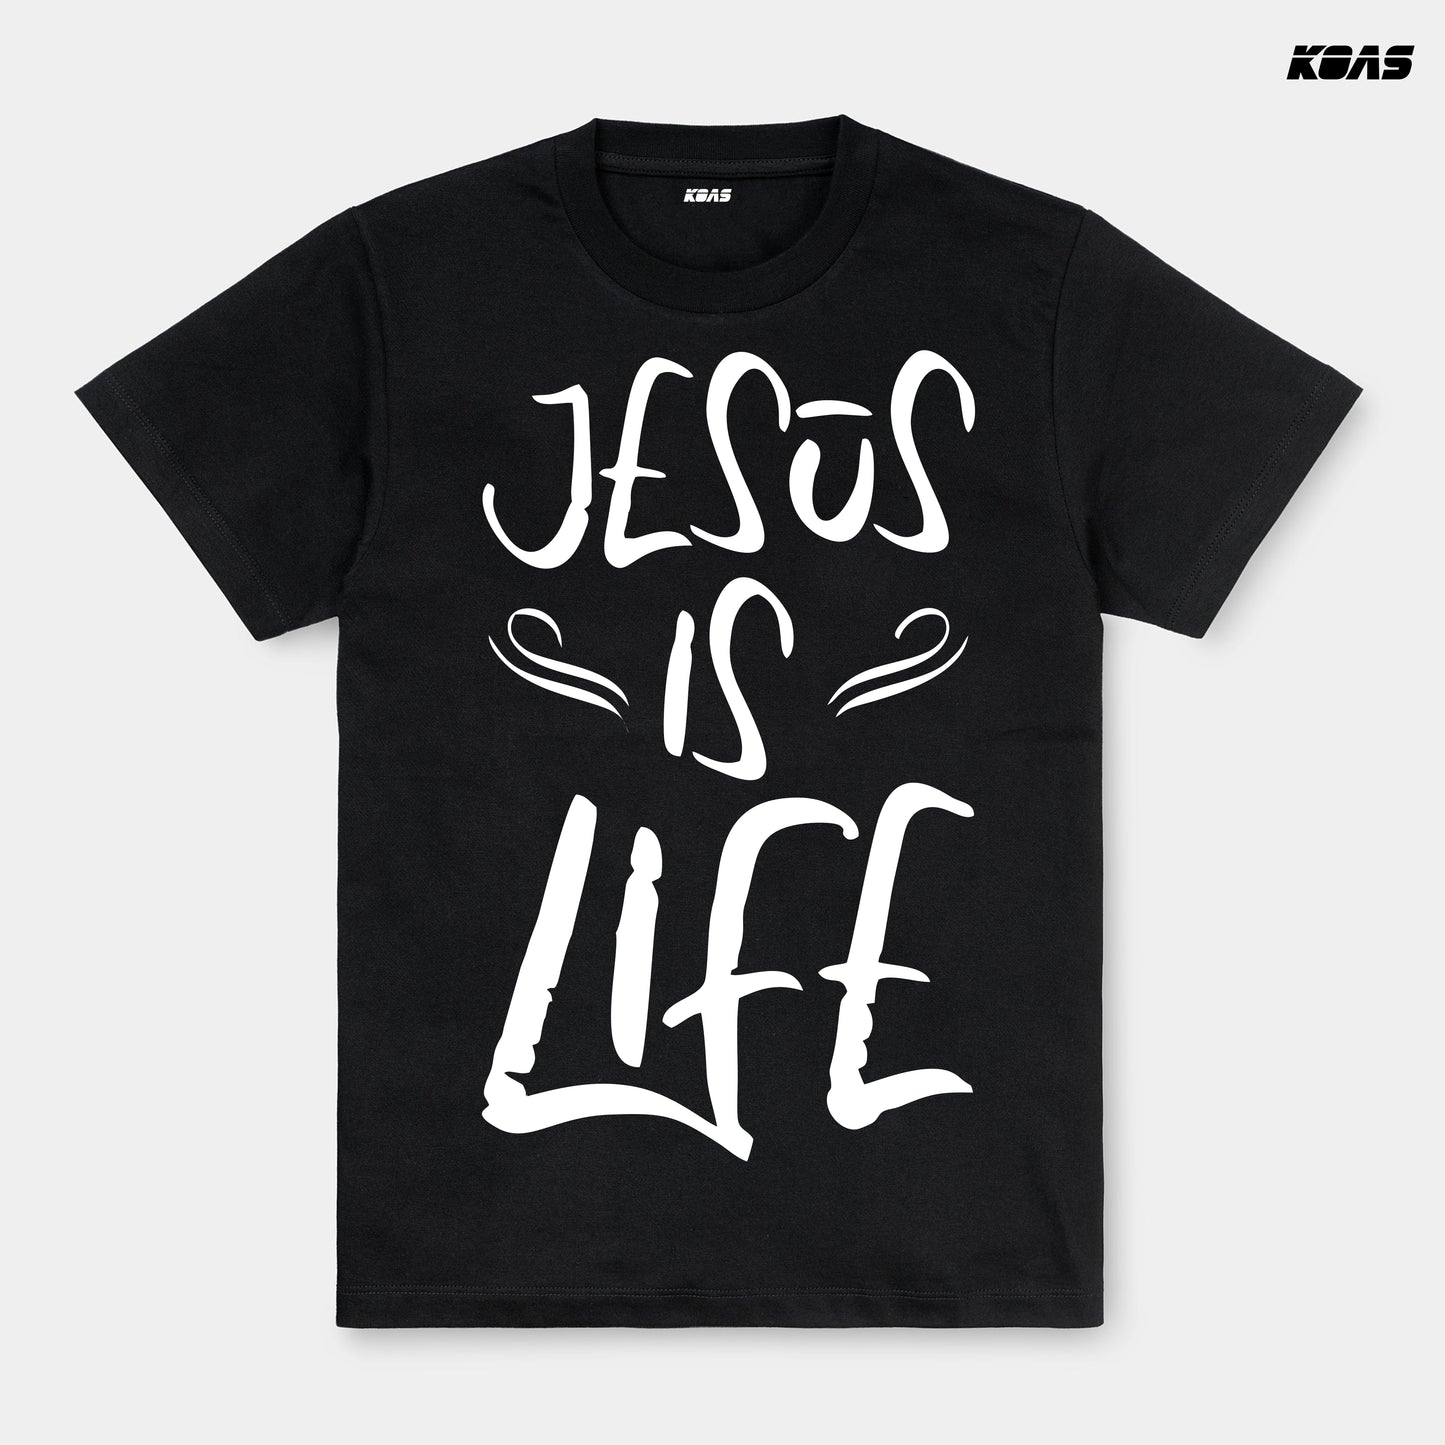 Jesus is life - Tshirt